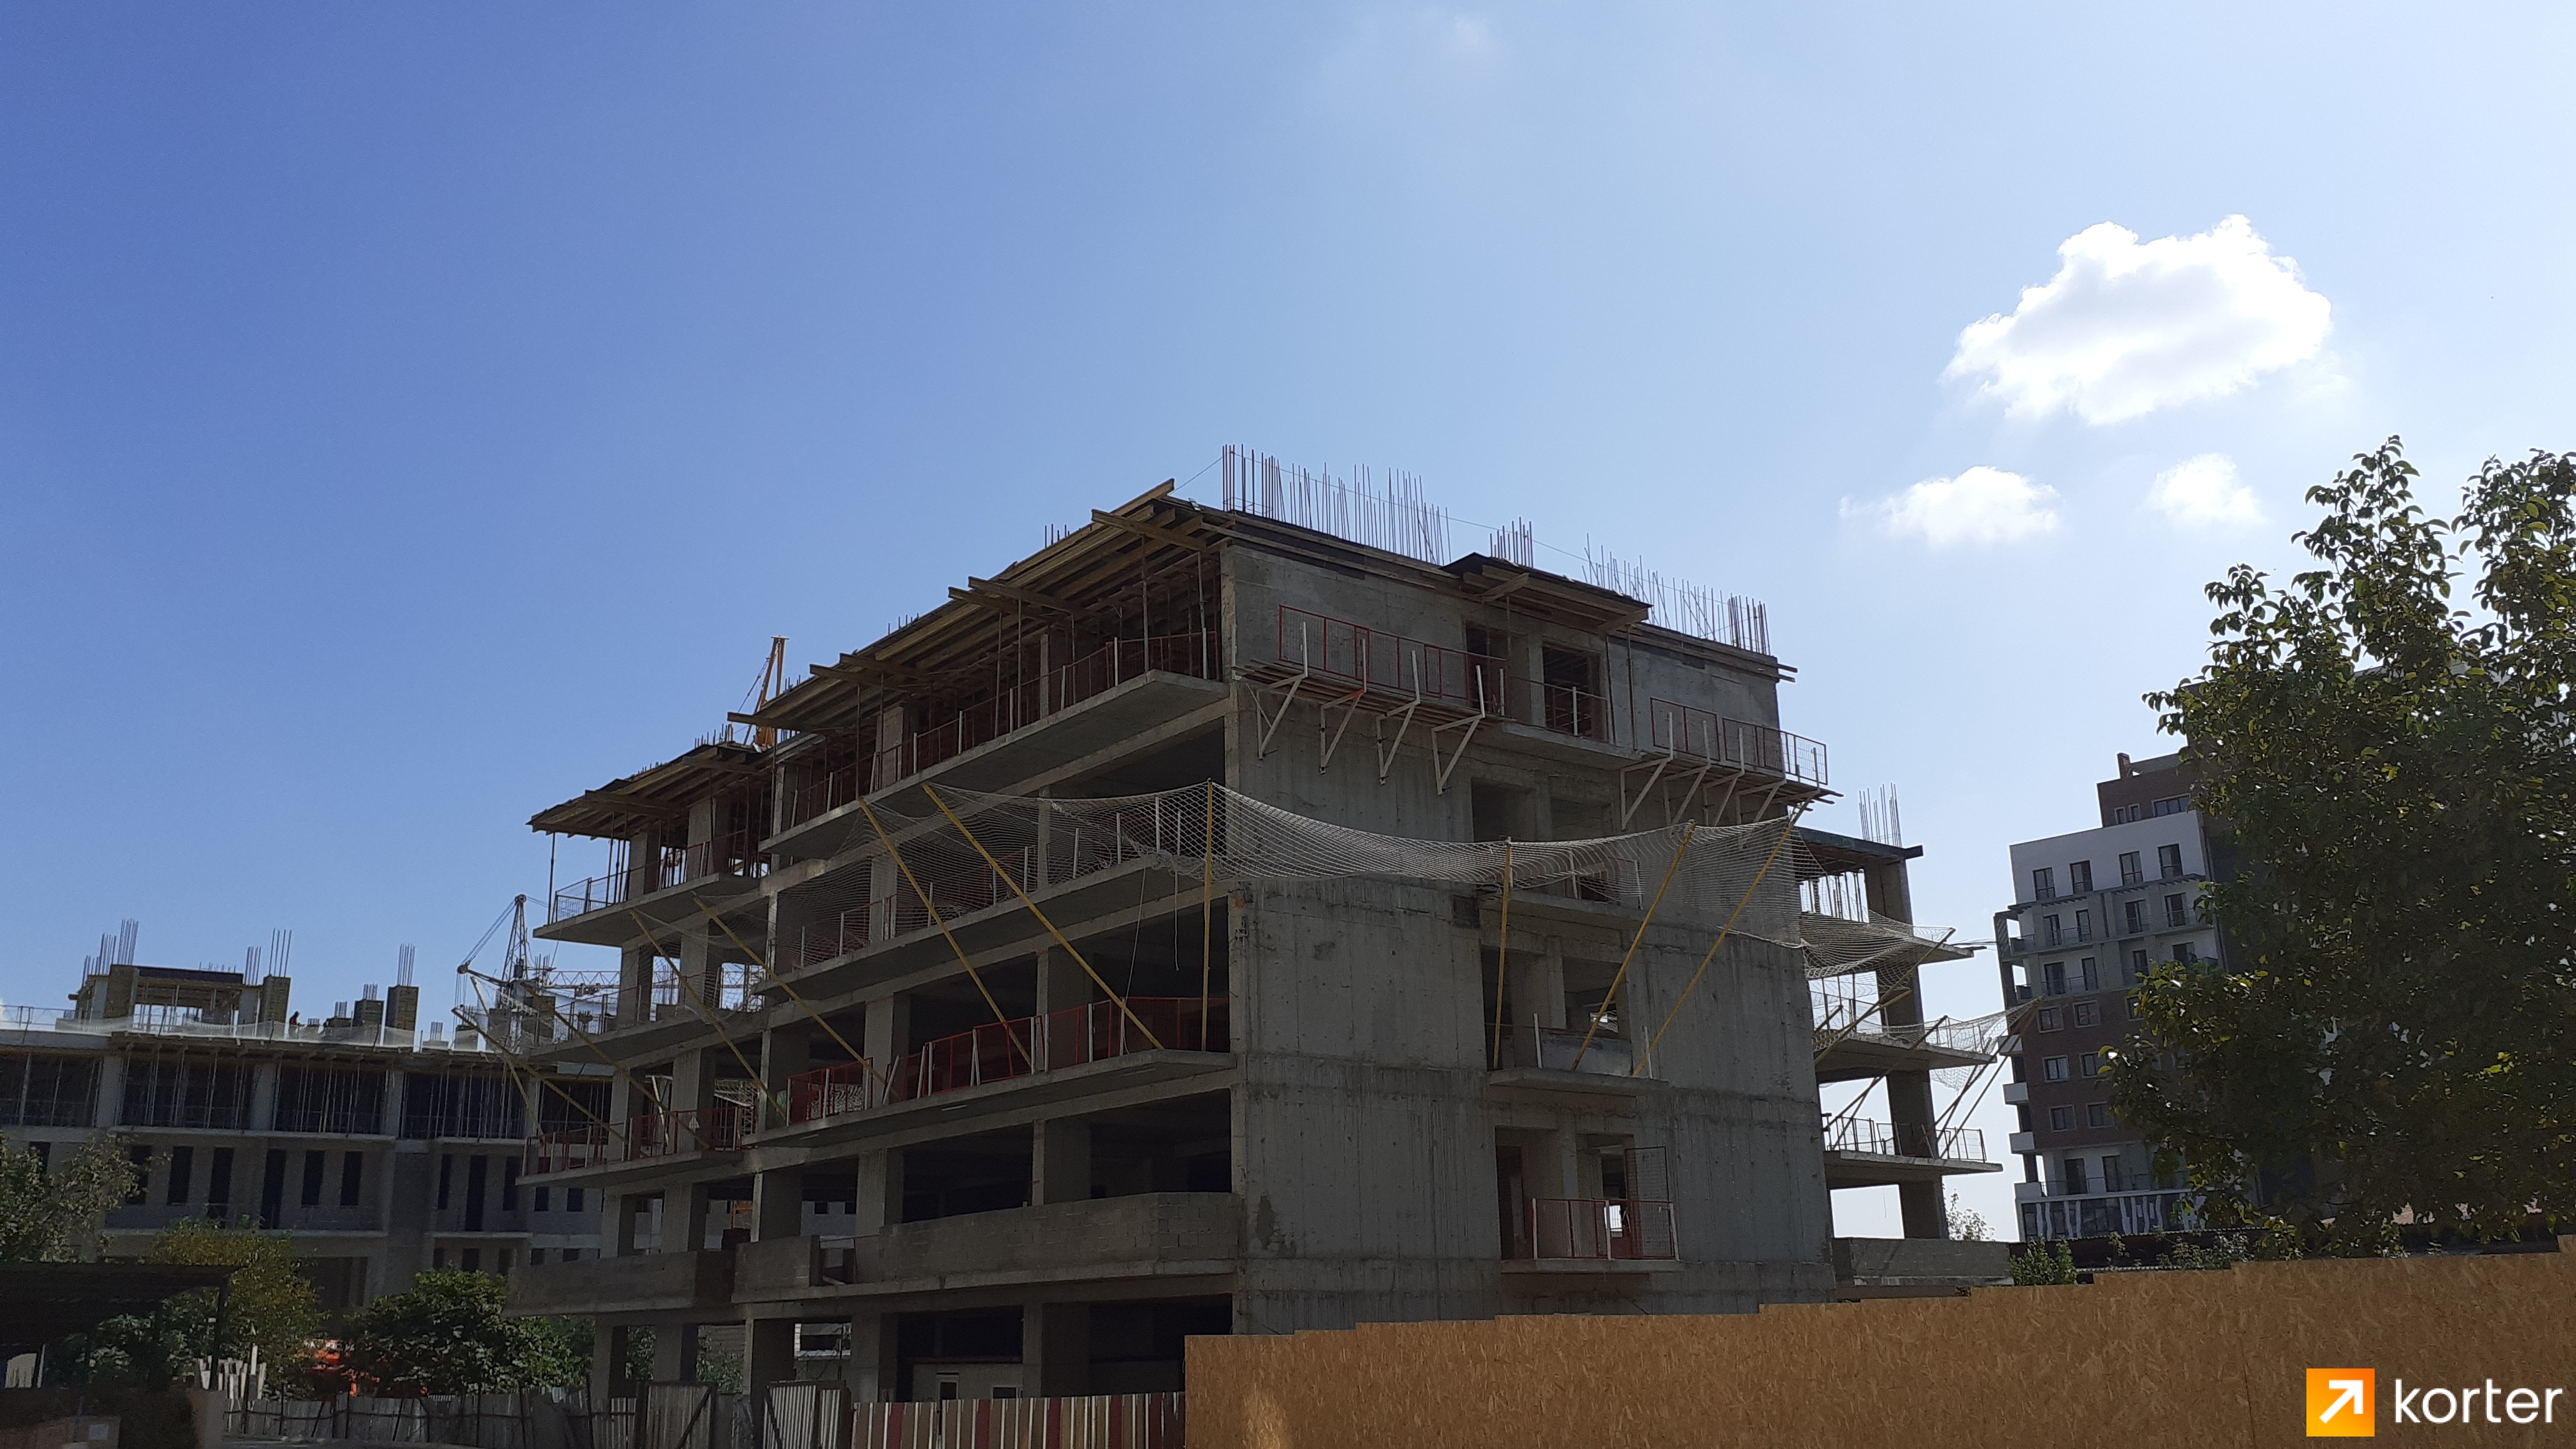 Construction progress Royal Tower - Angle 2, October 2020